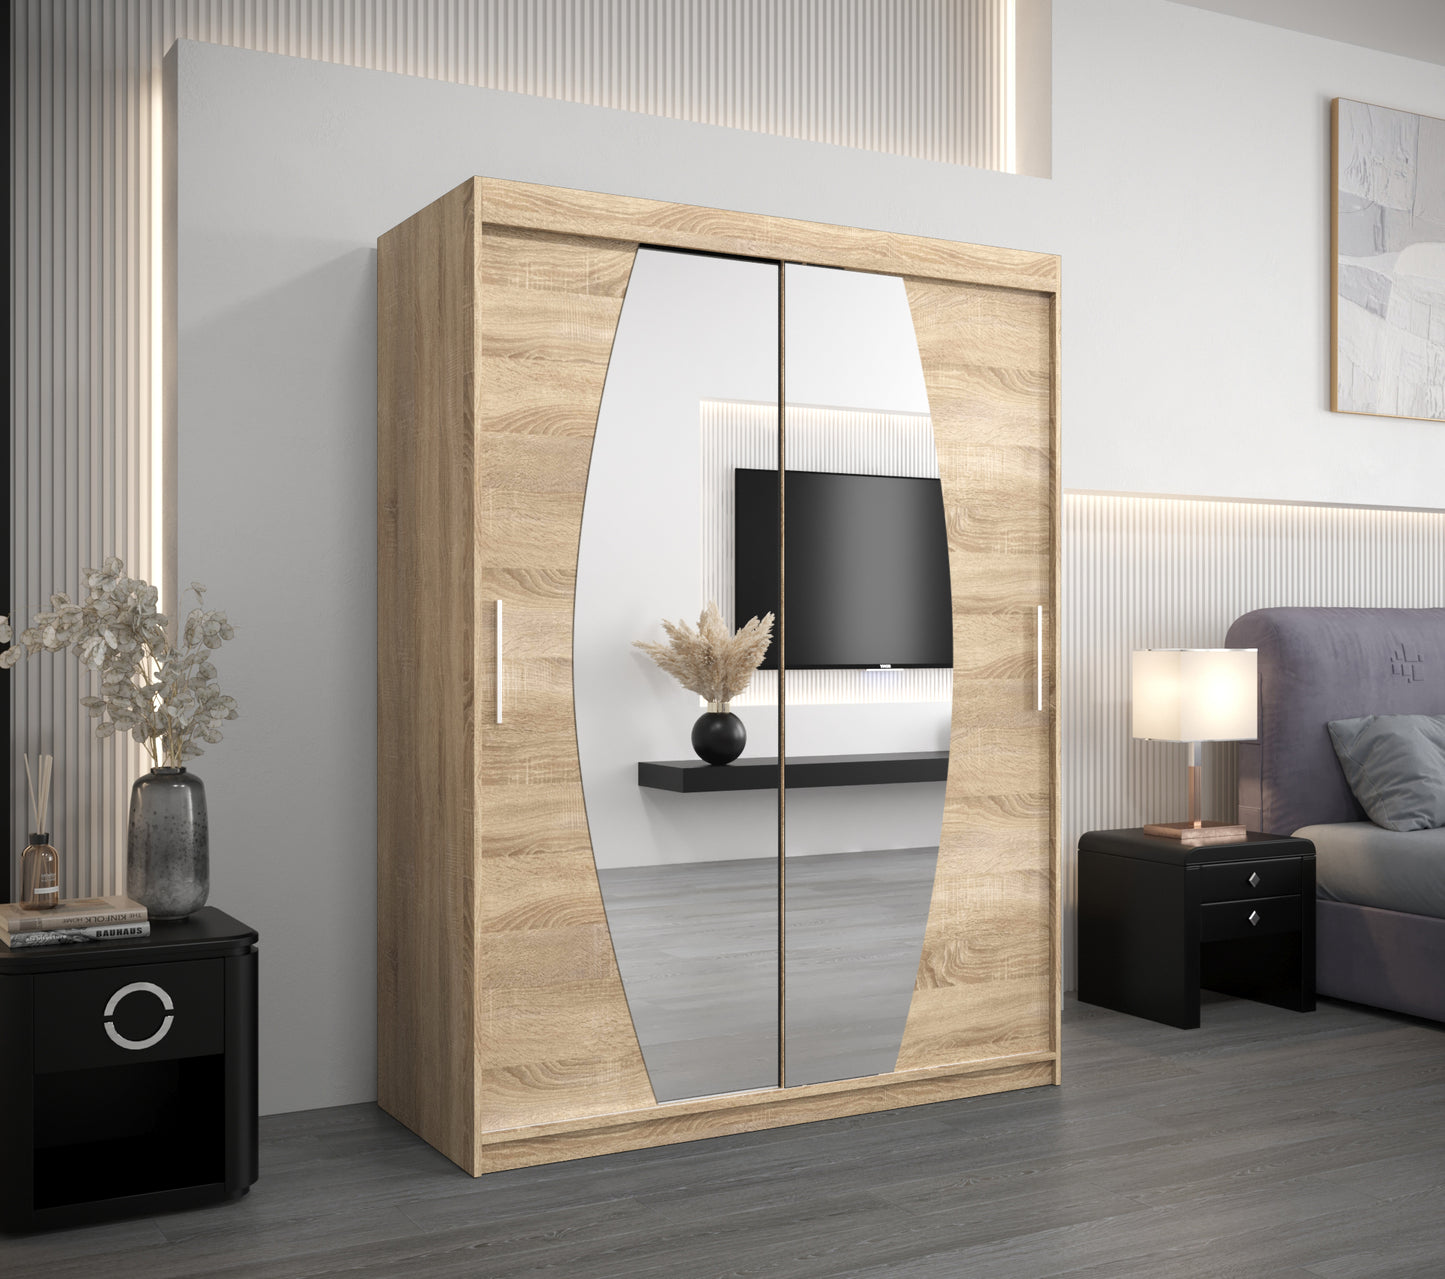 ECLIPTO - Wardrobe Sliding Doors Mirrors Colour Combinations Drawers Optional >150cm x 200cm<